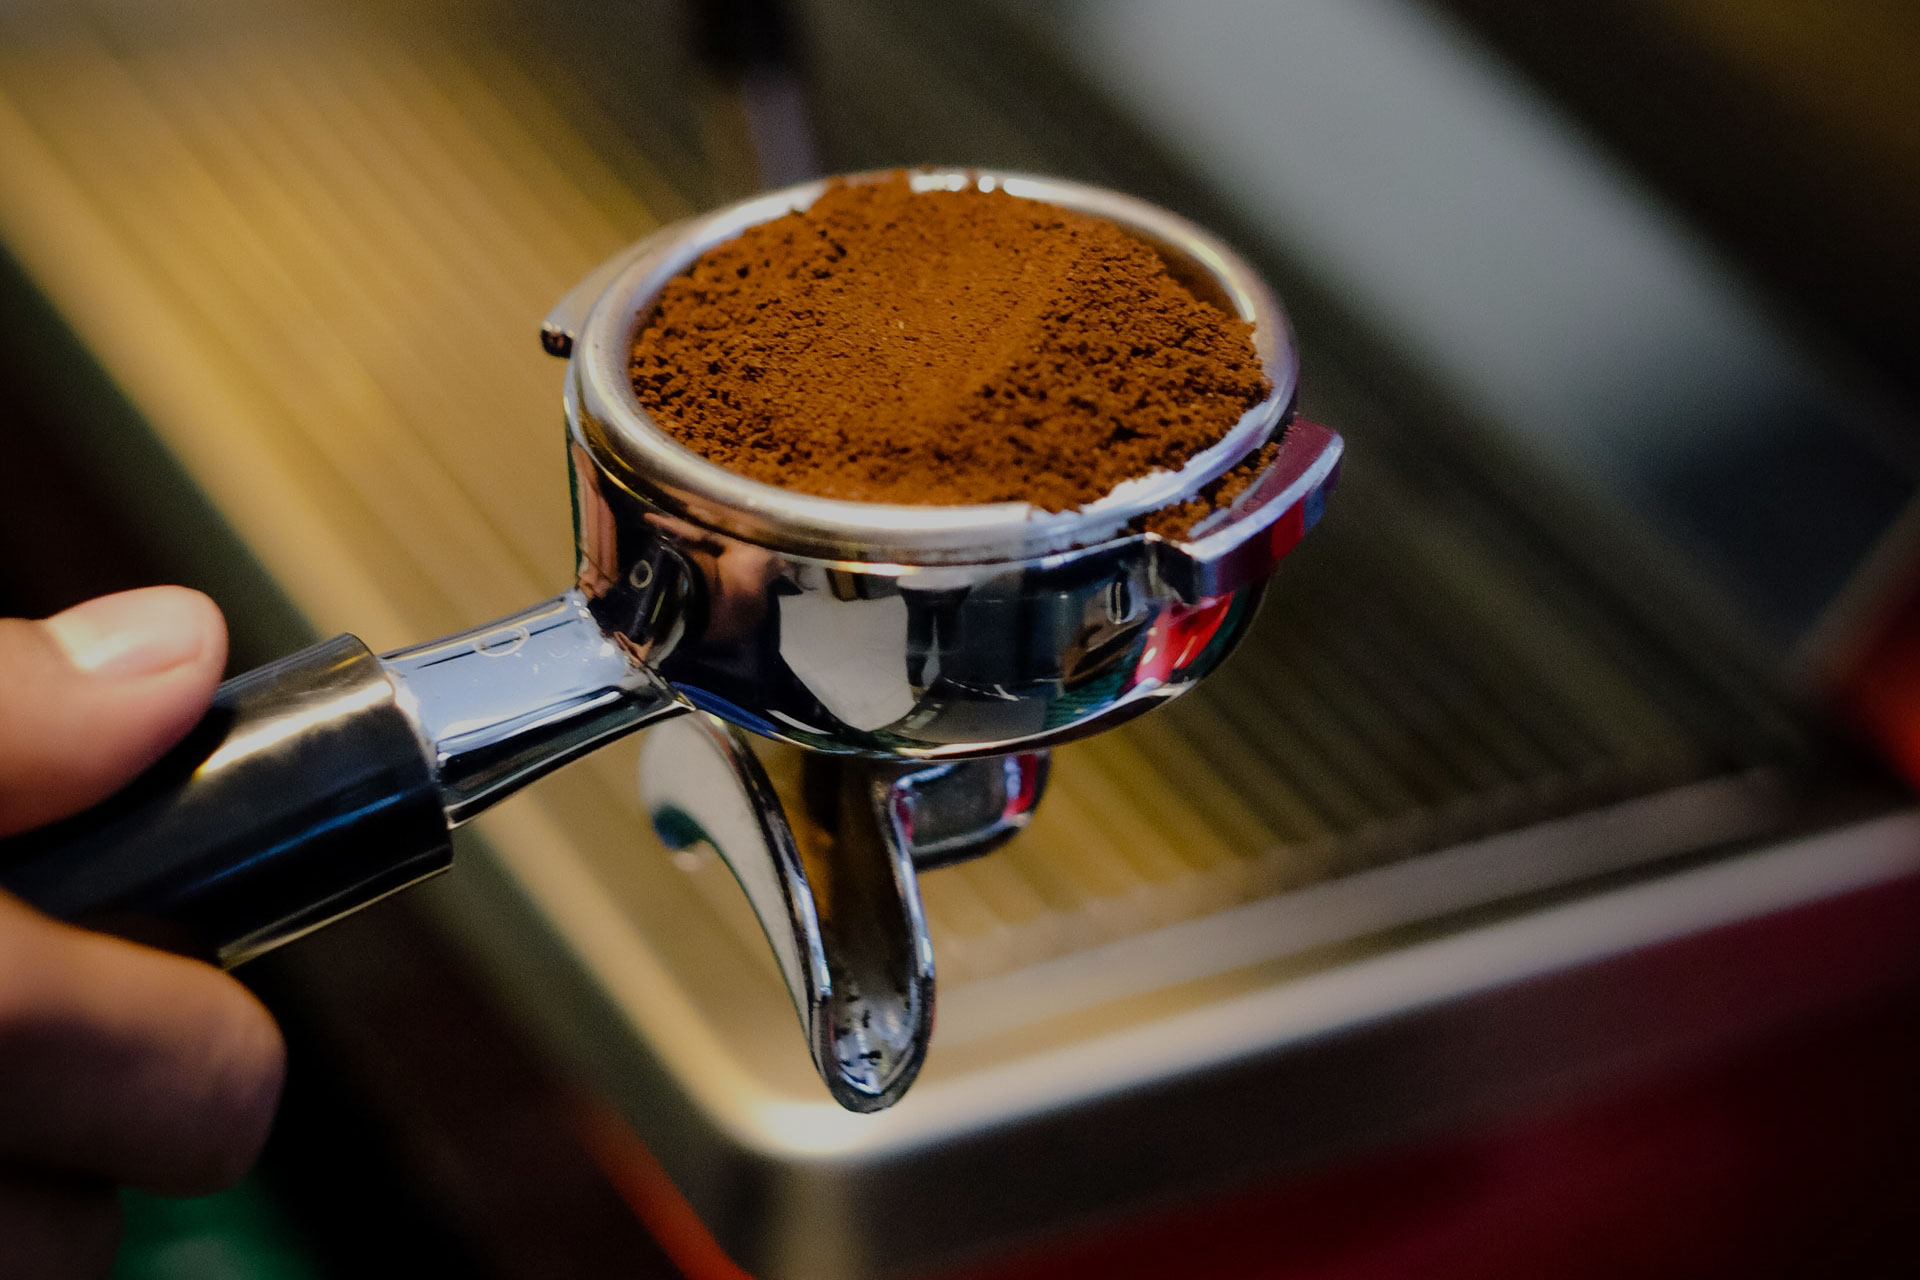 How to set up a grinder (for espresso)